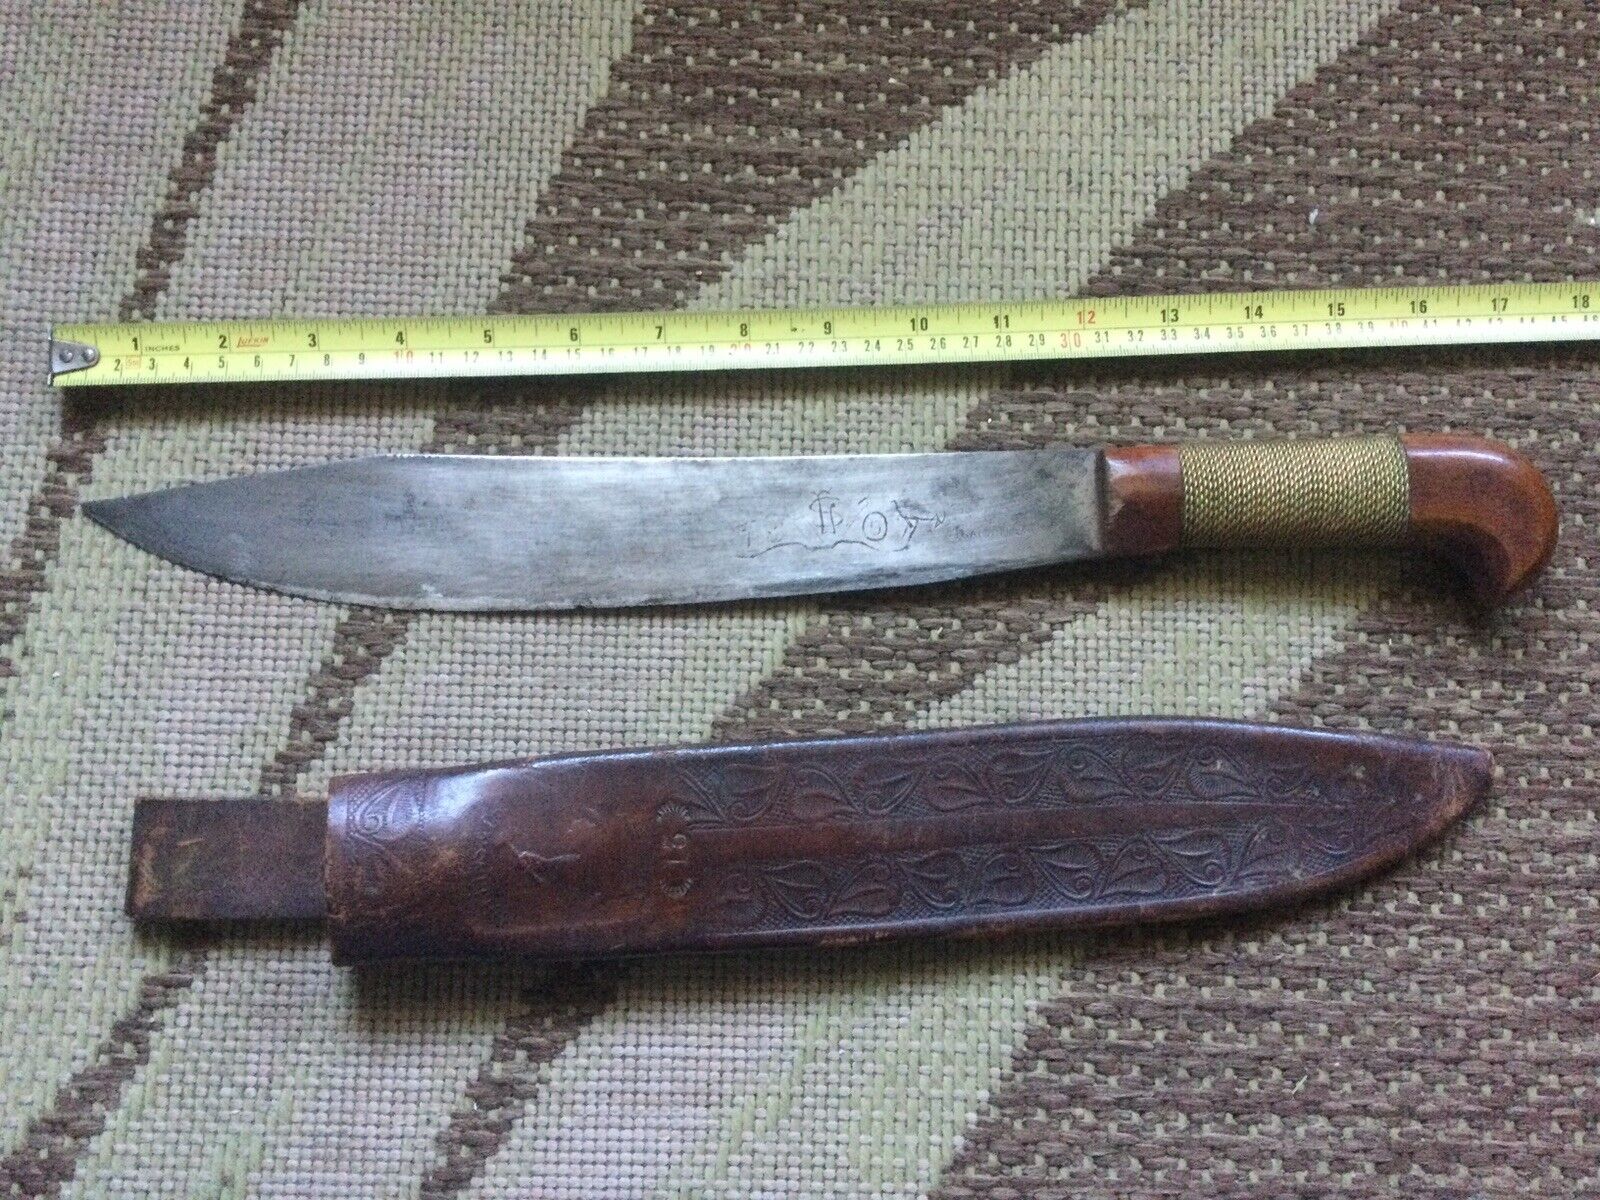 Collins Legitimus #254 knife machete dated 1907 with original sheath